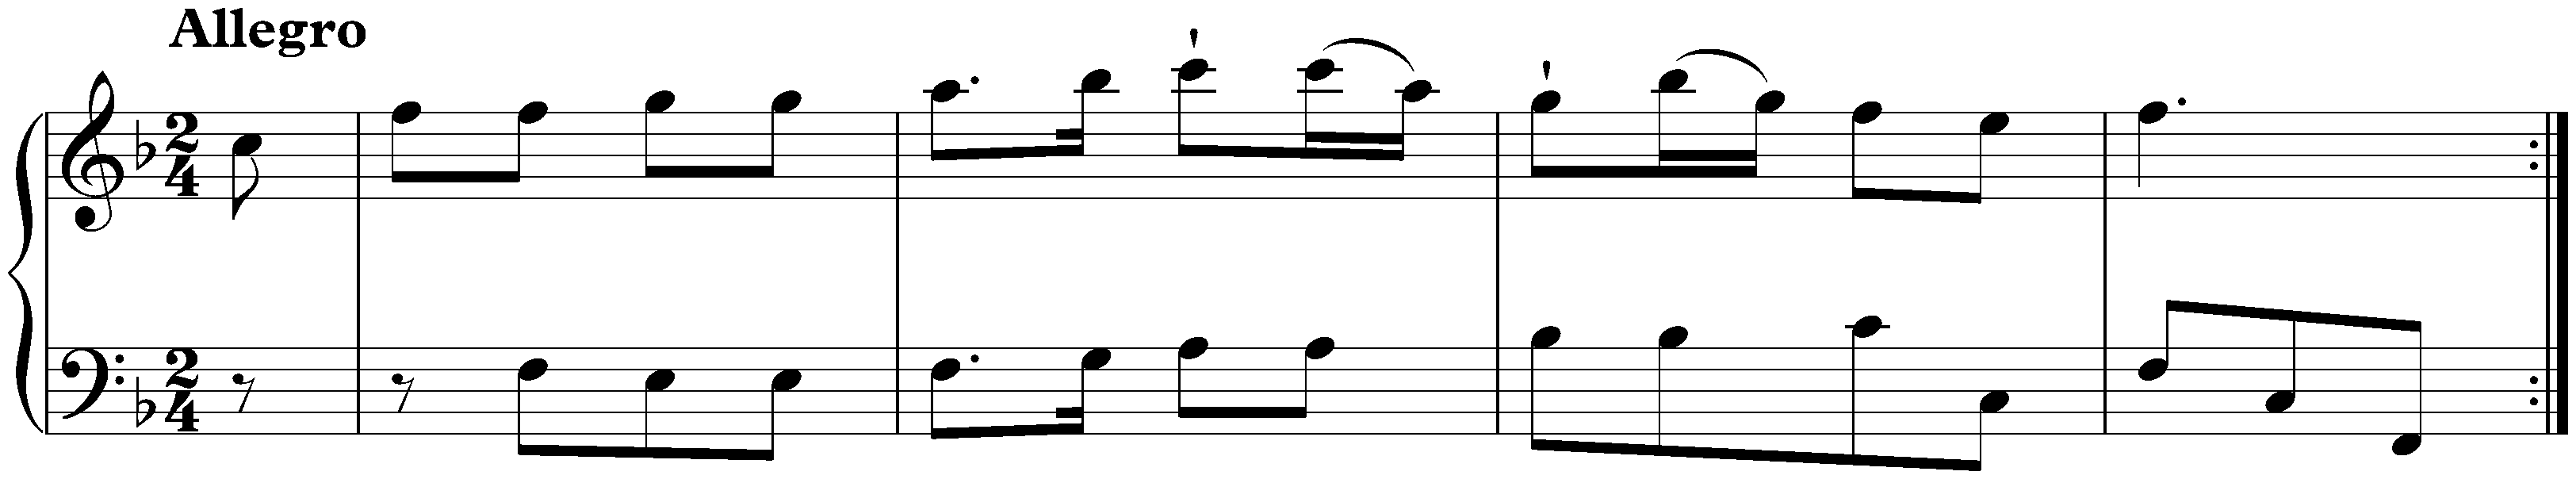 Notebook for Nannerl, KV 1–8; 55. Allegro in F major, KV 1c